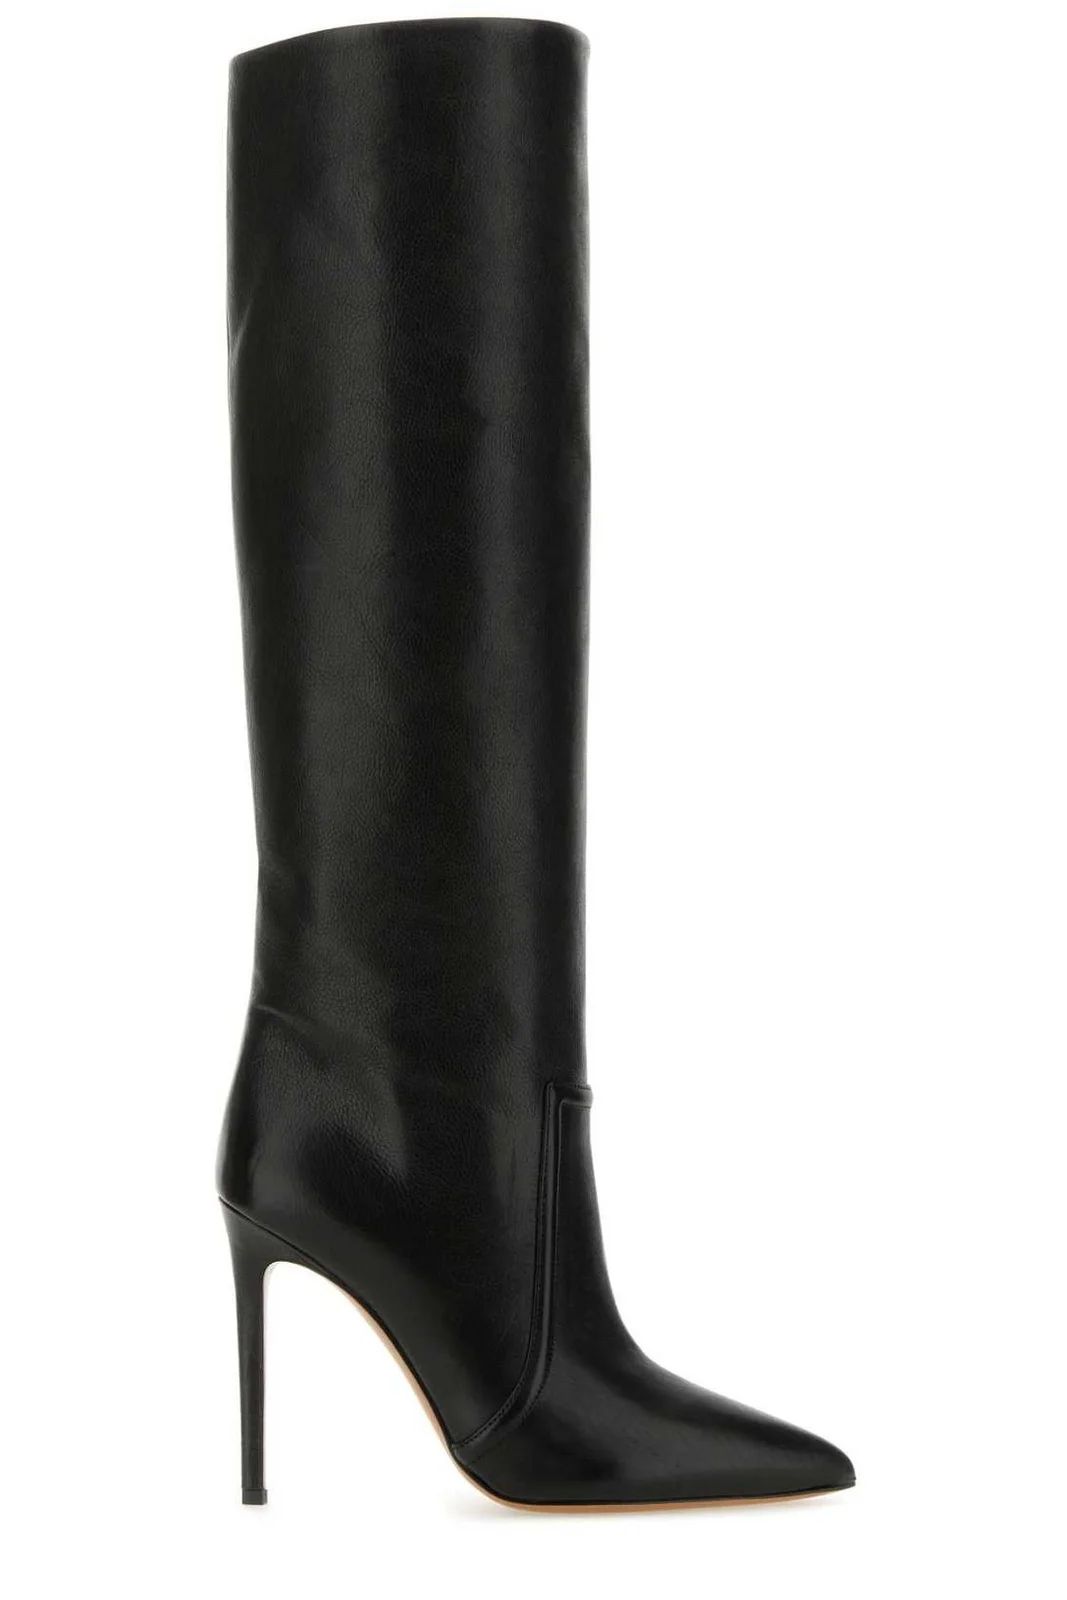 Paris Texas Knee-Length High Stiletto Heel Boots | Cettire Global